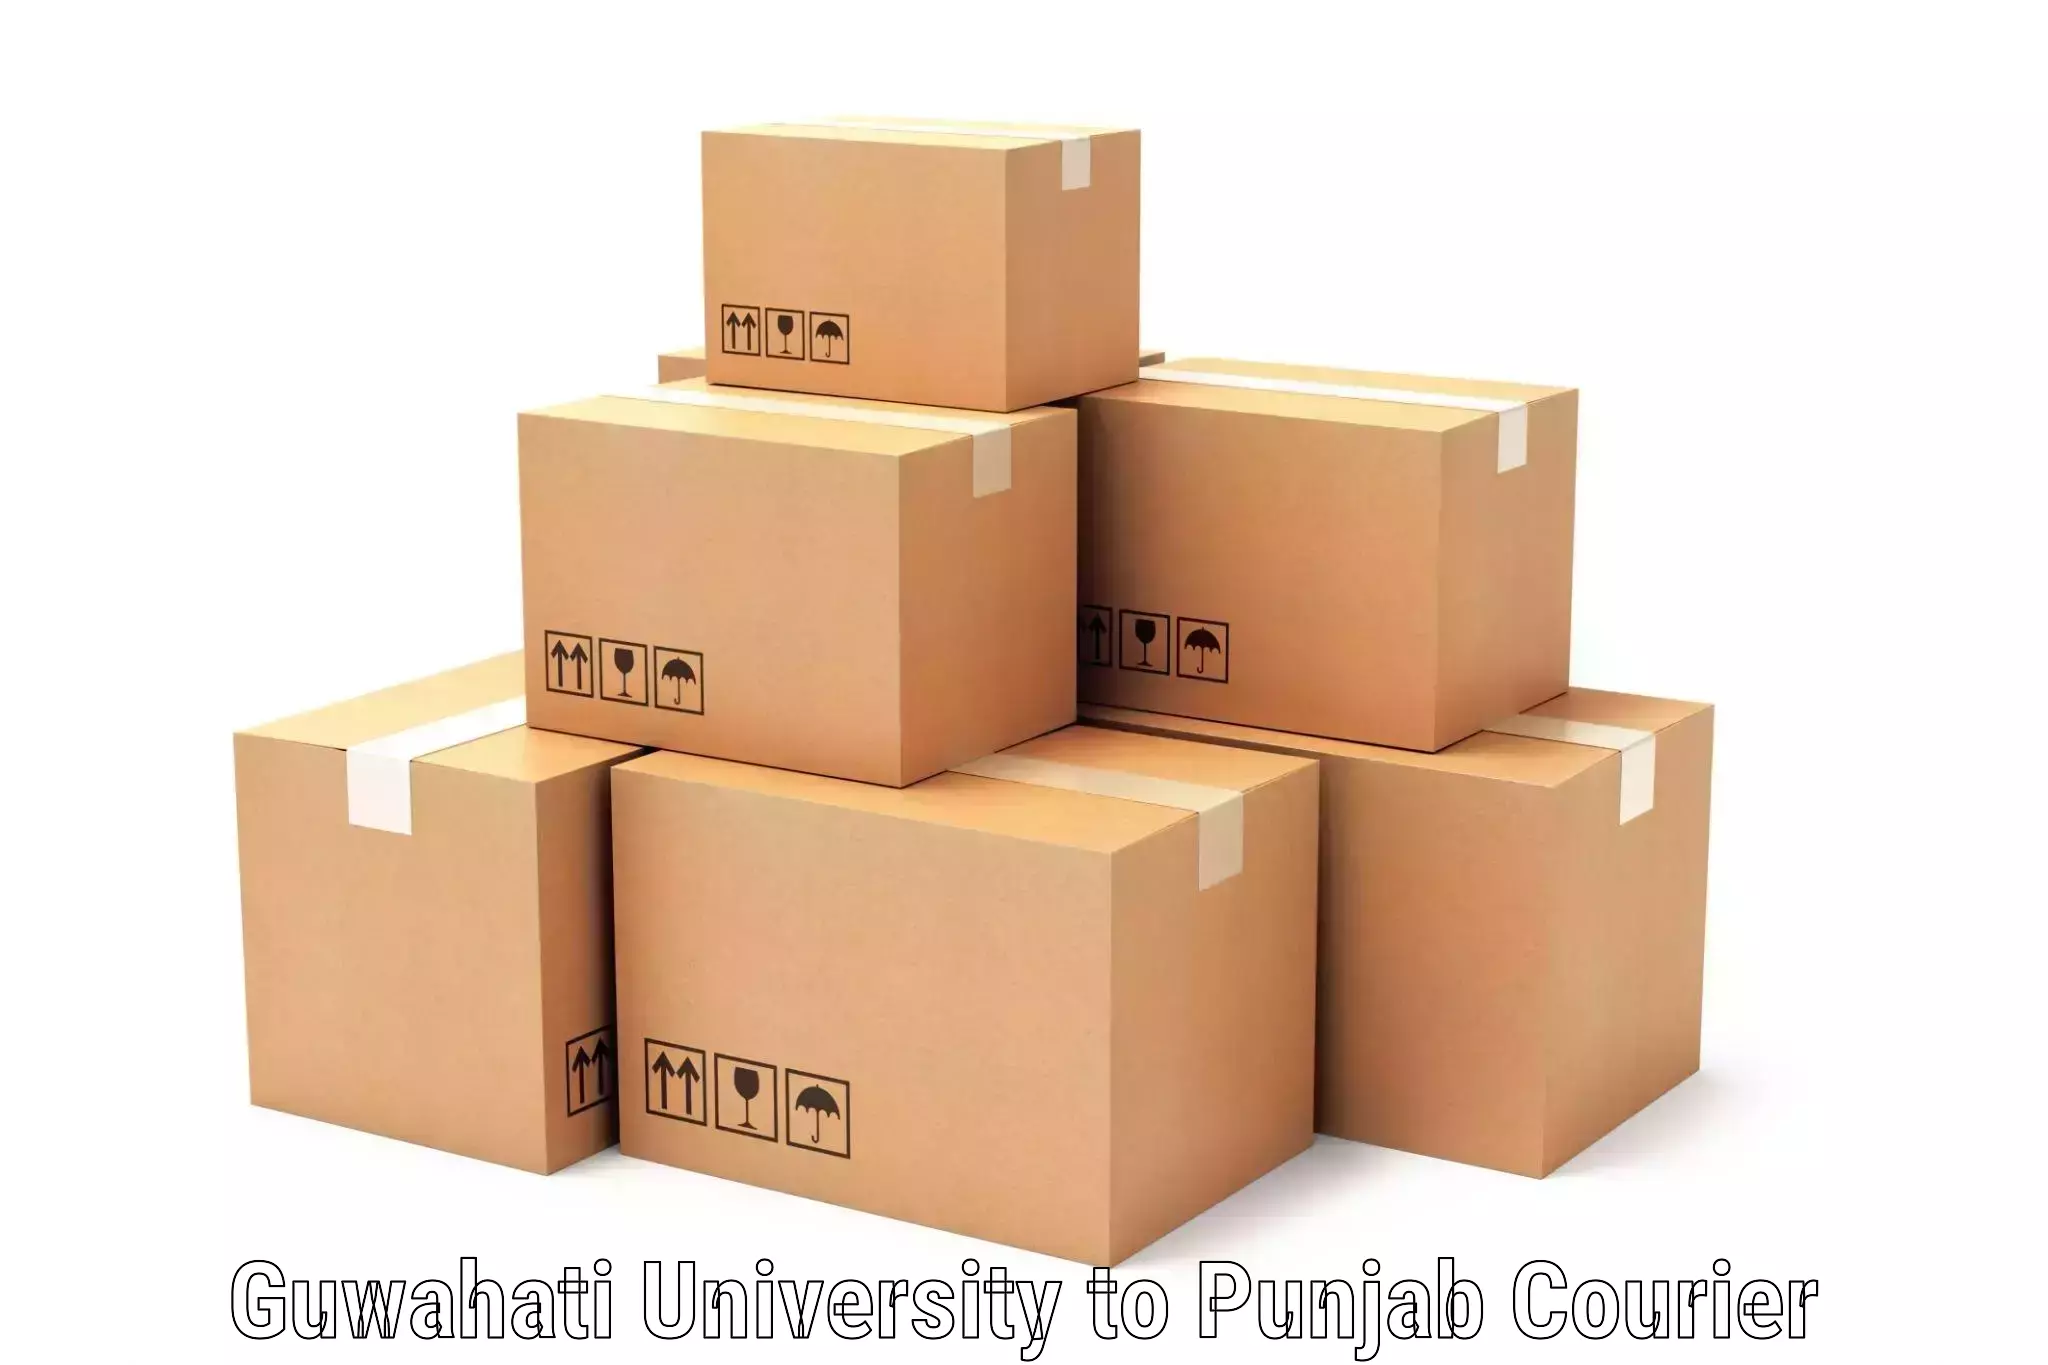 Reliable courier service Guwahati University to Kapurthala